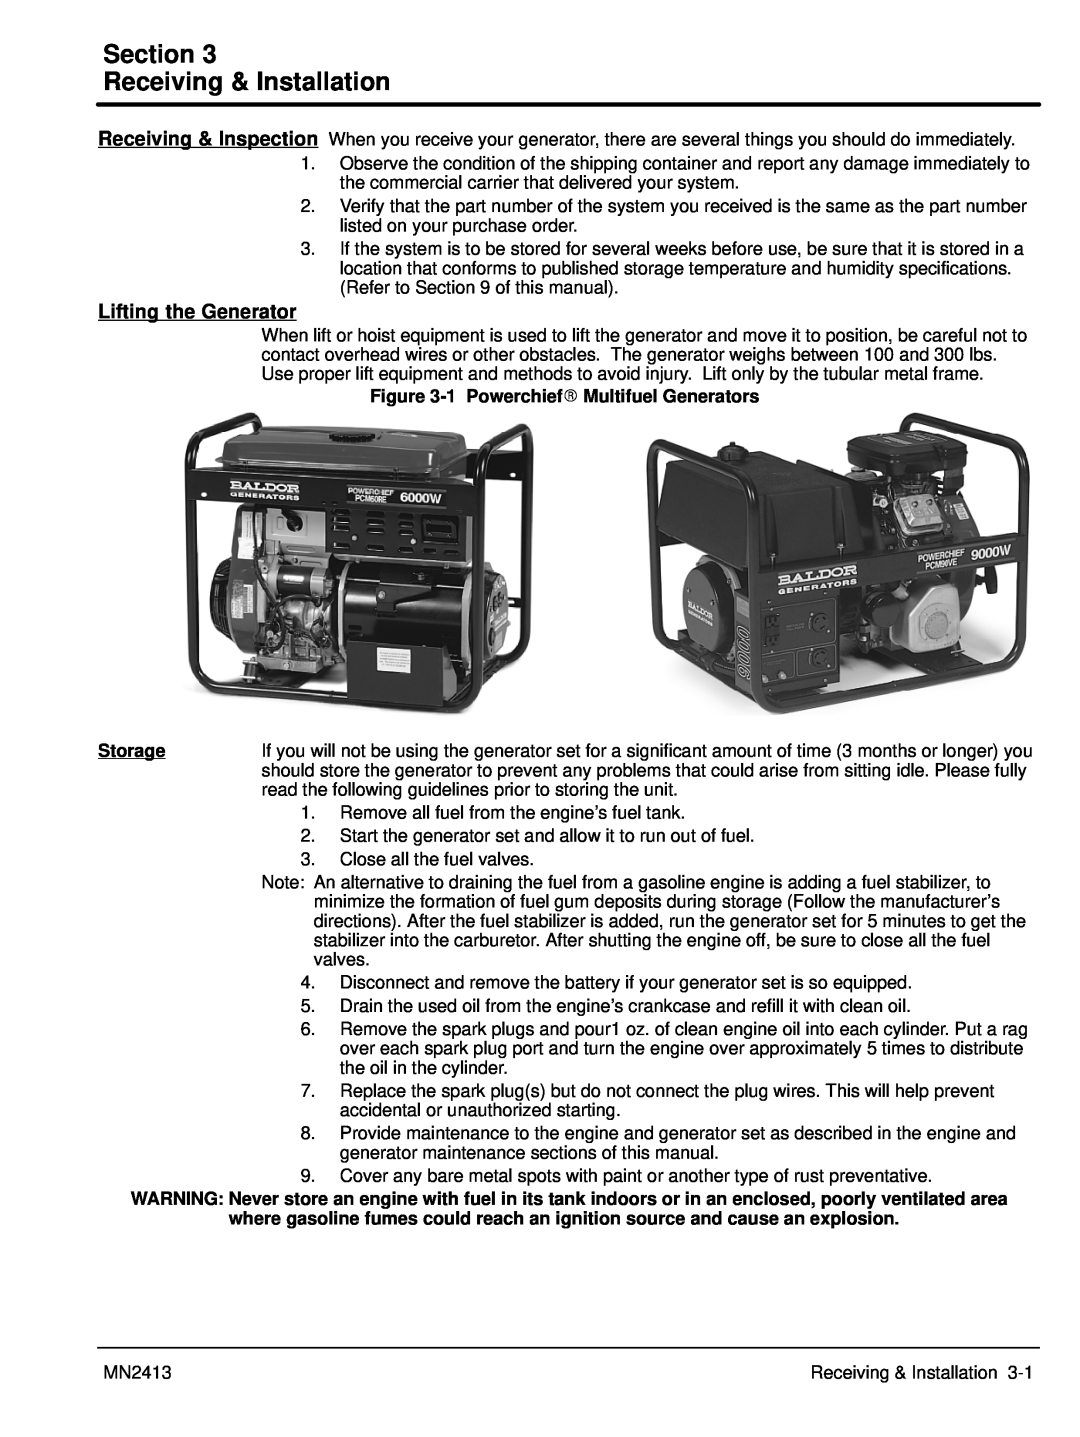 Baldor Series PC Mutlifuel manual Section Receiving & Installation, Lifting the Generator 